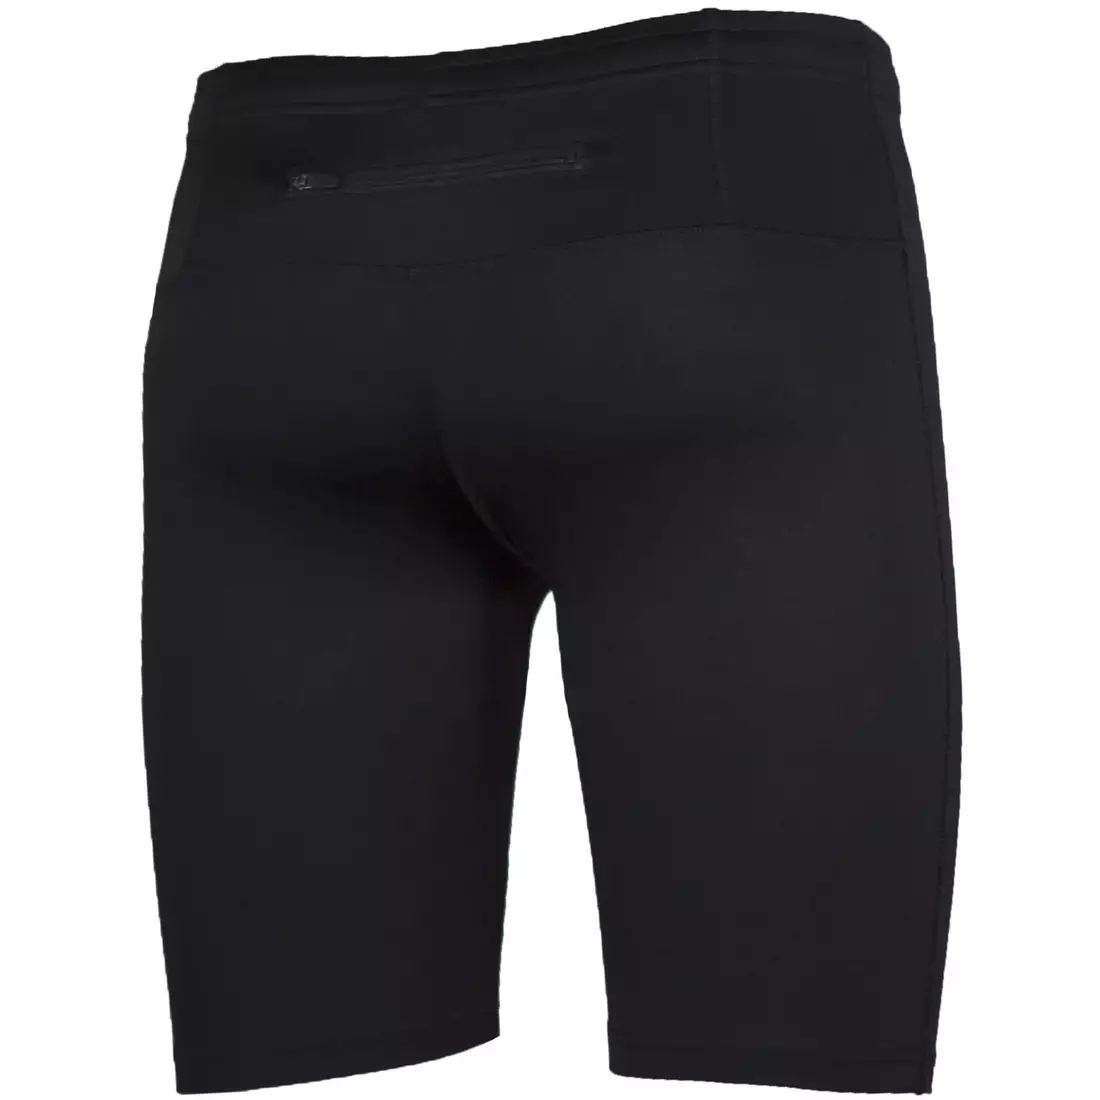 ROGELLI RUN SAN DIEGO - Men's jogging shorts